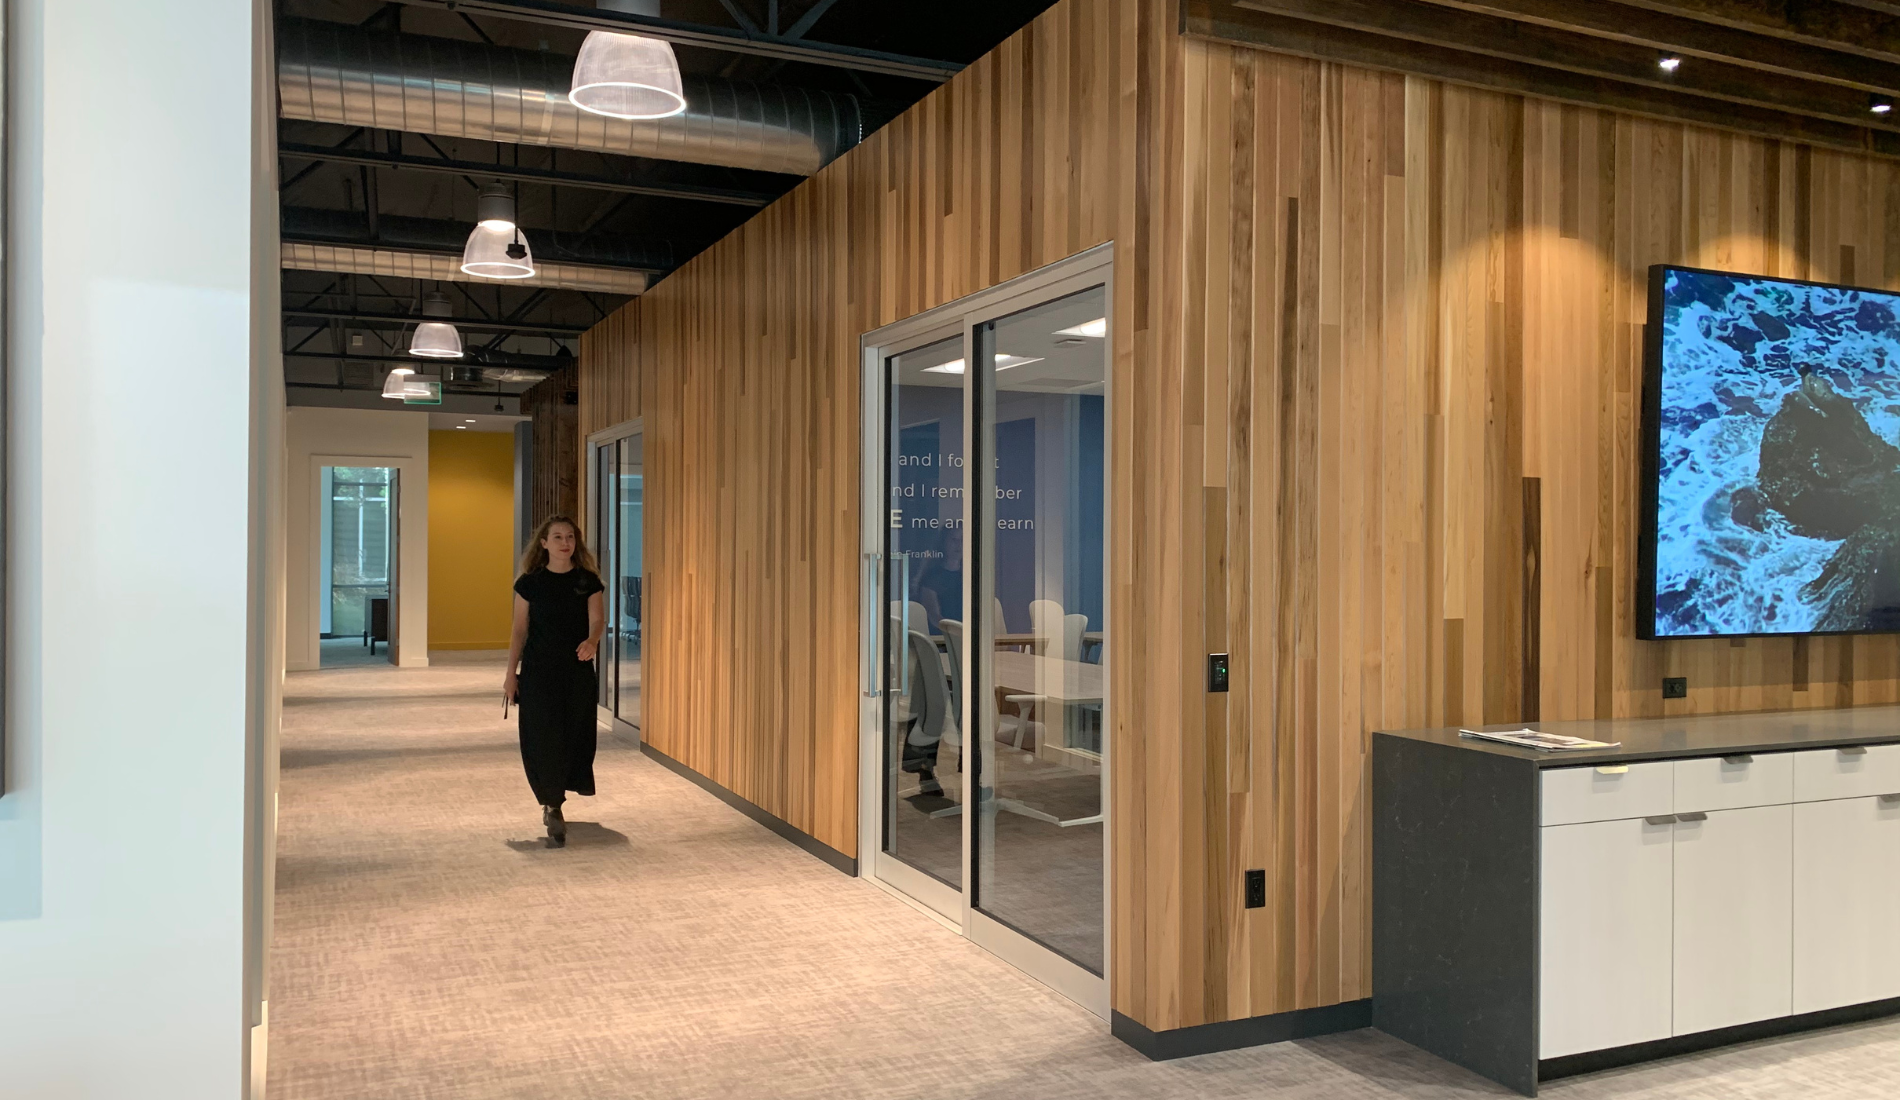 San Diego interior design office hallway, person walking by wood walls, glass door and overhead lighting